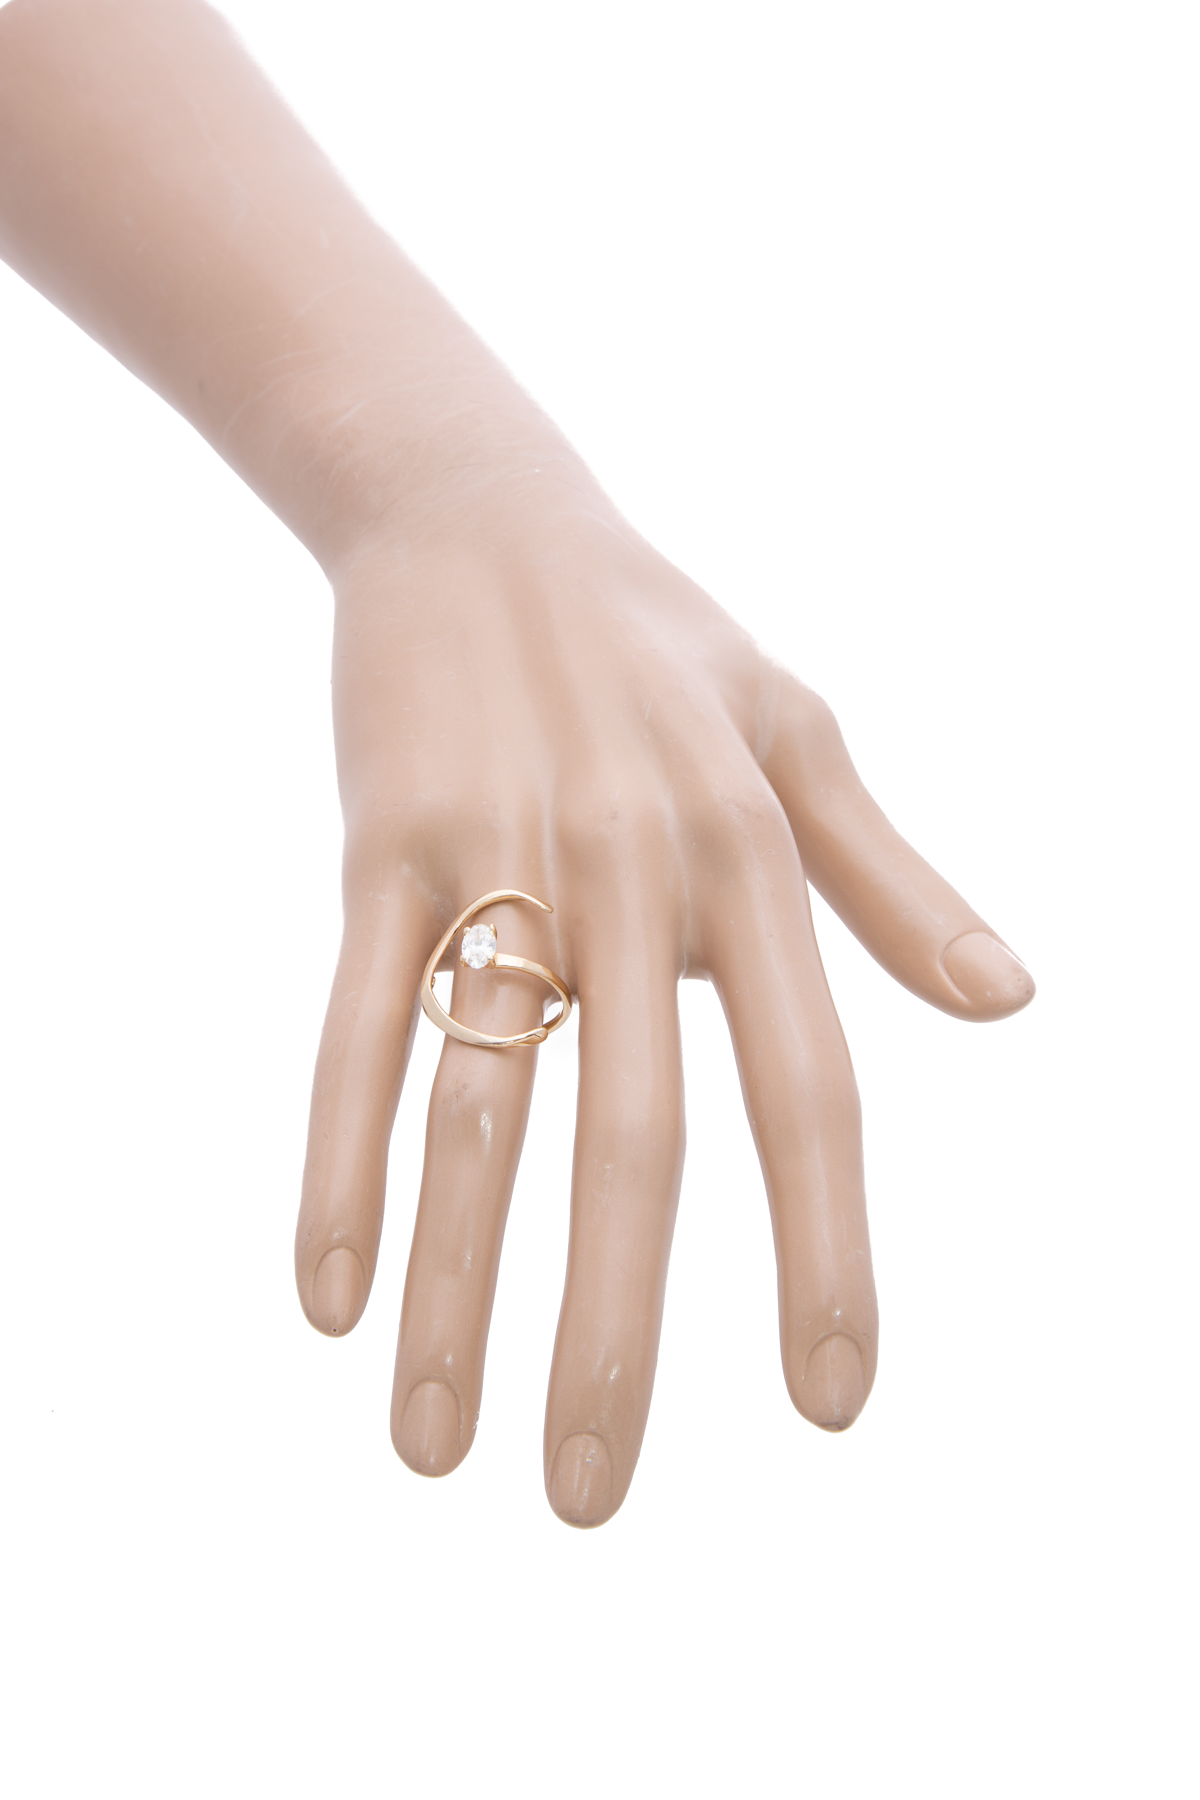 Fine Jewelry Half Moon Diamond Ring - Size 7.5